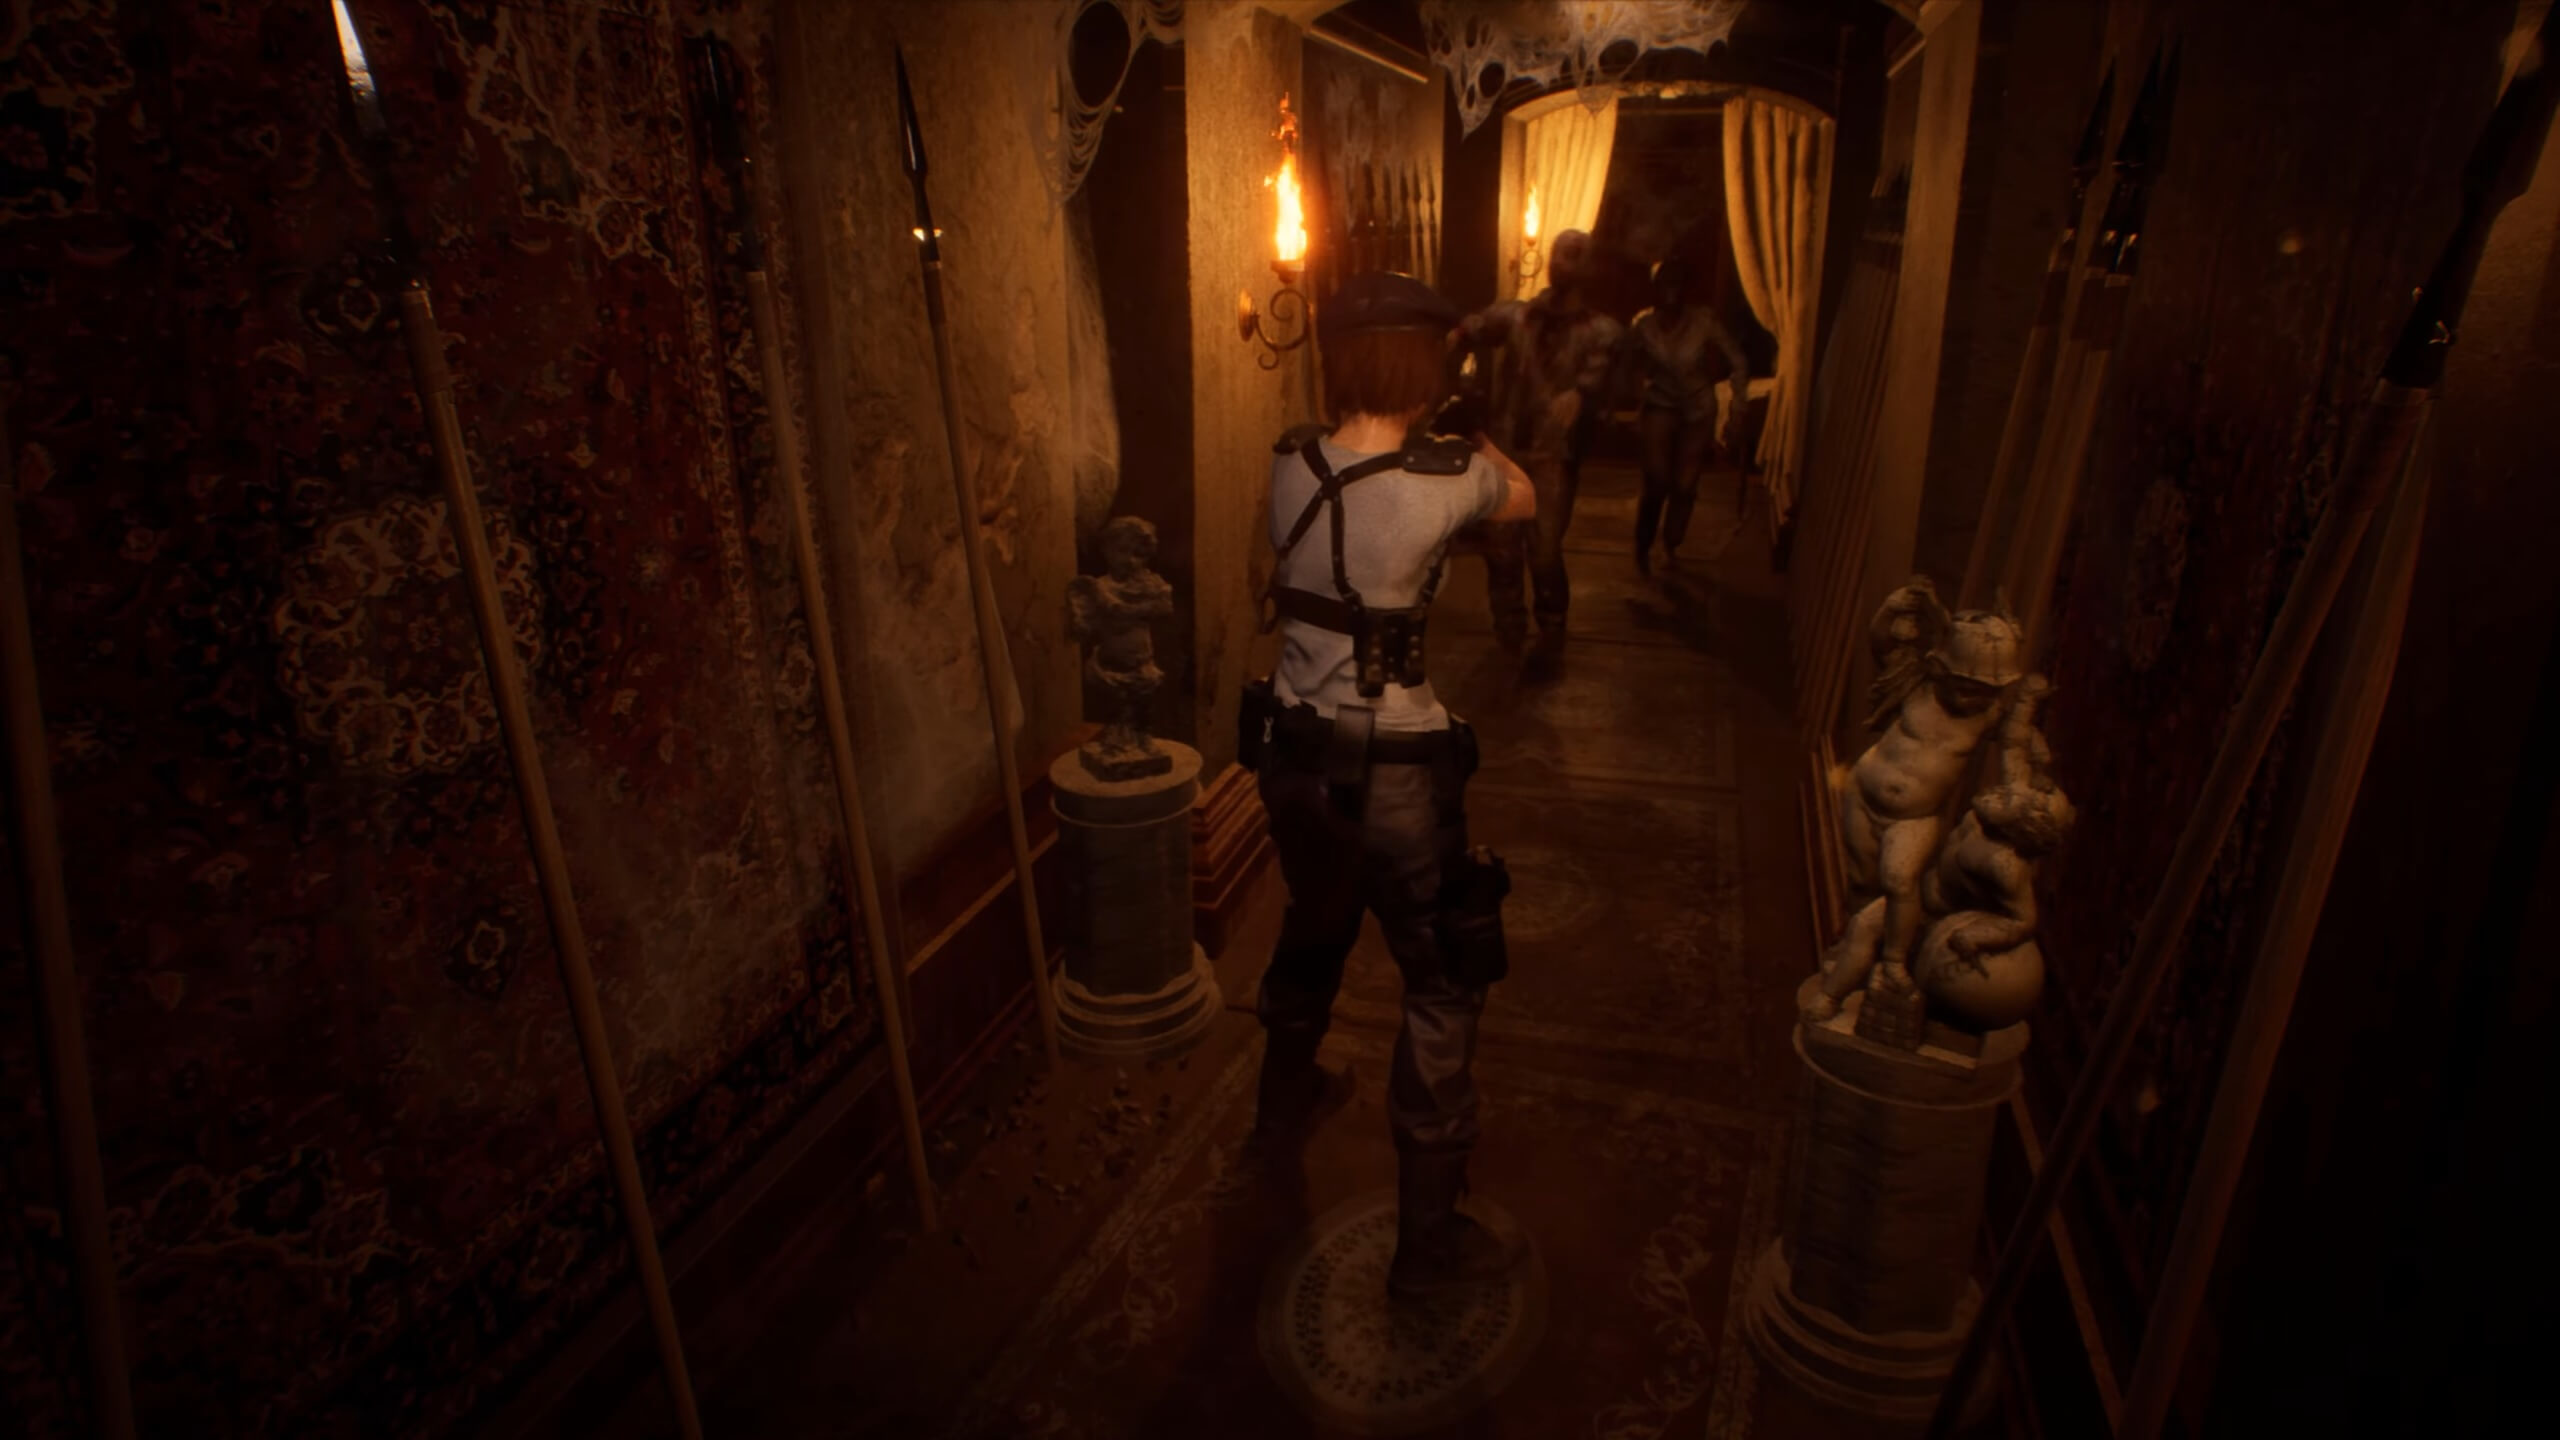 Resident Evil Remake in Unreal Engine 4 with over the shoulder camera